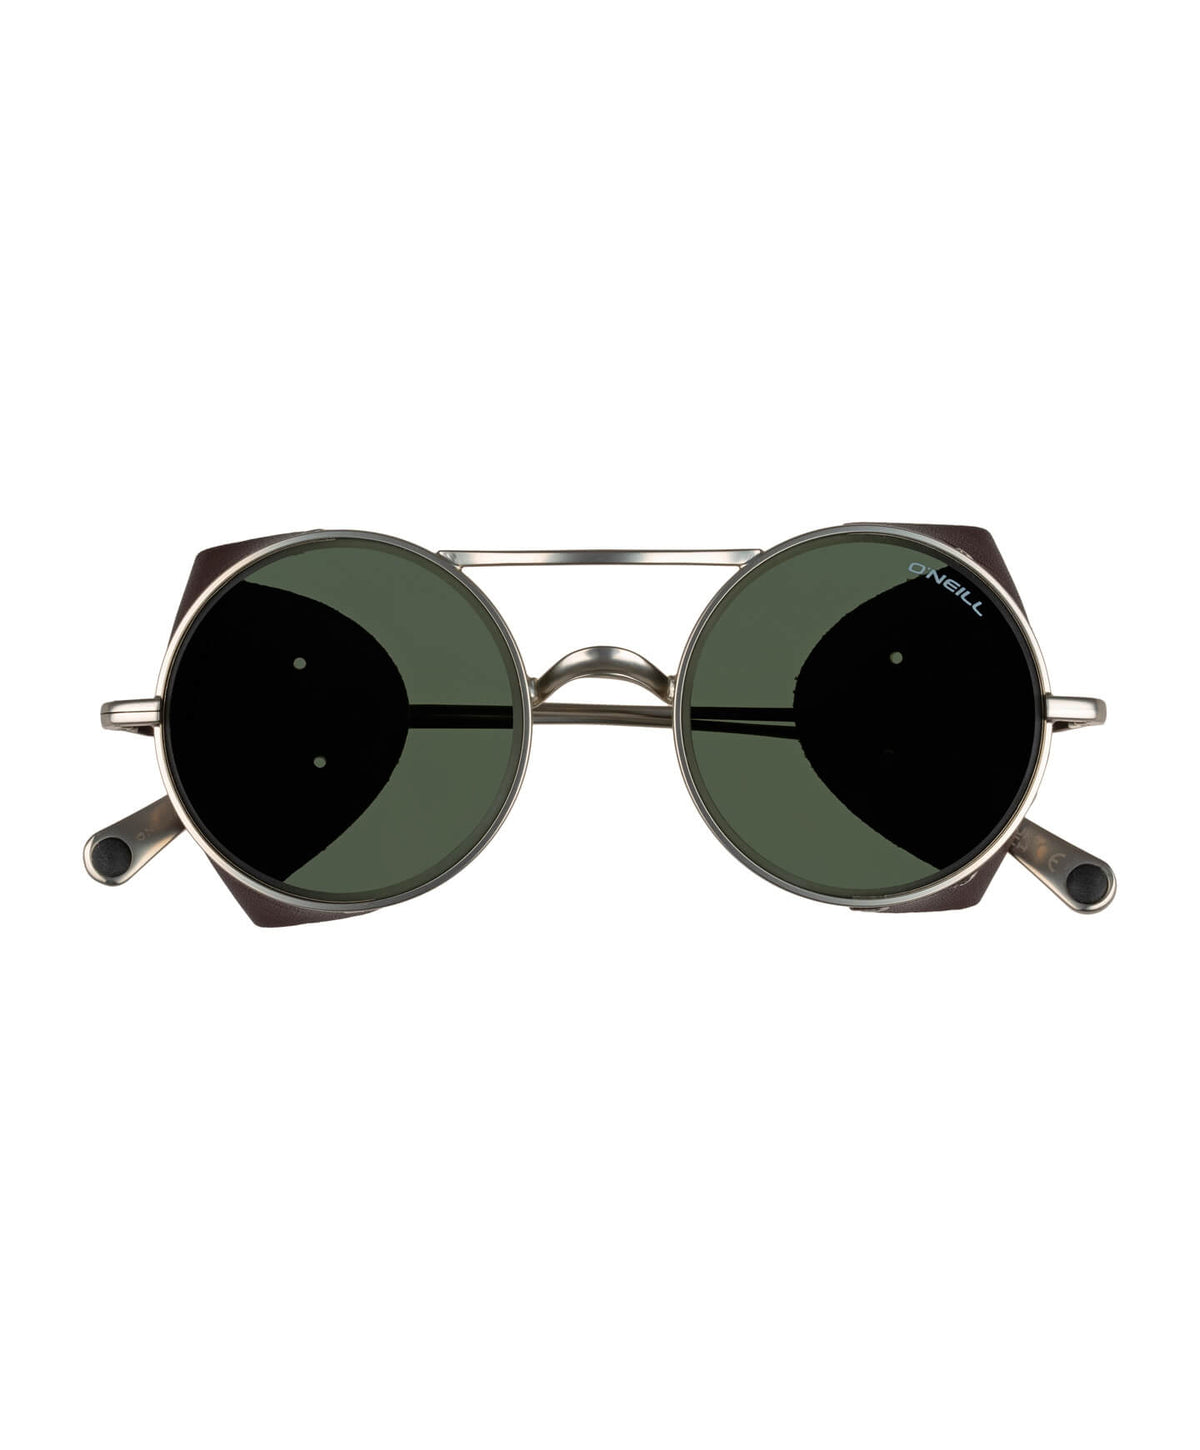 Jack 2.0 Sunglasses - Silver